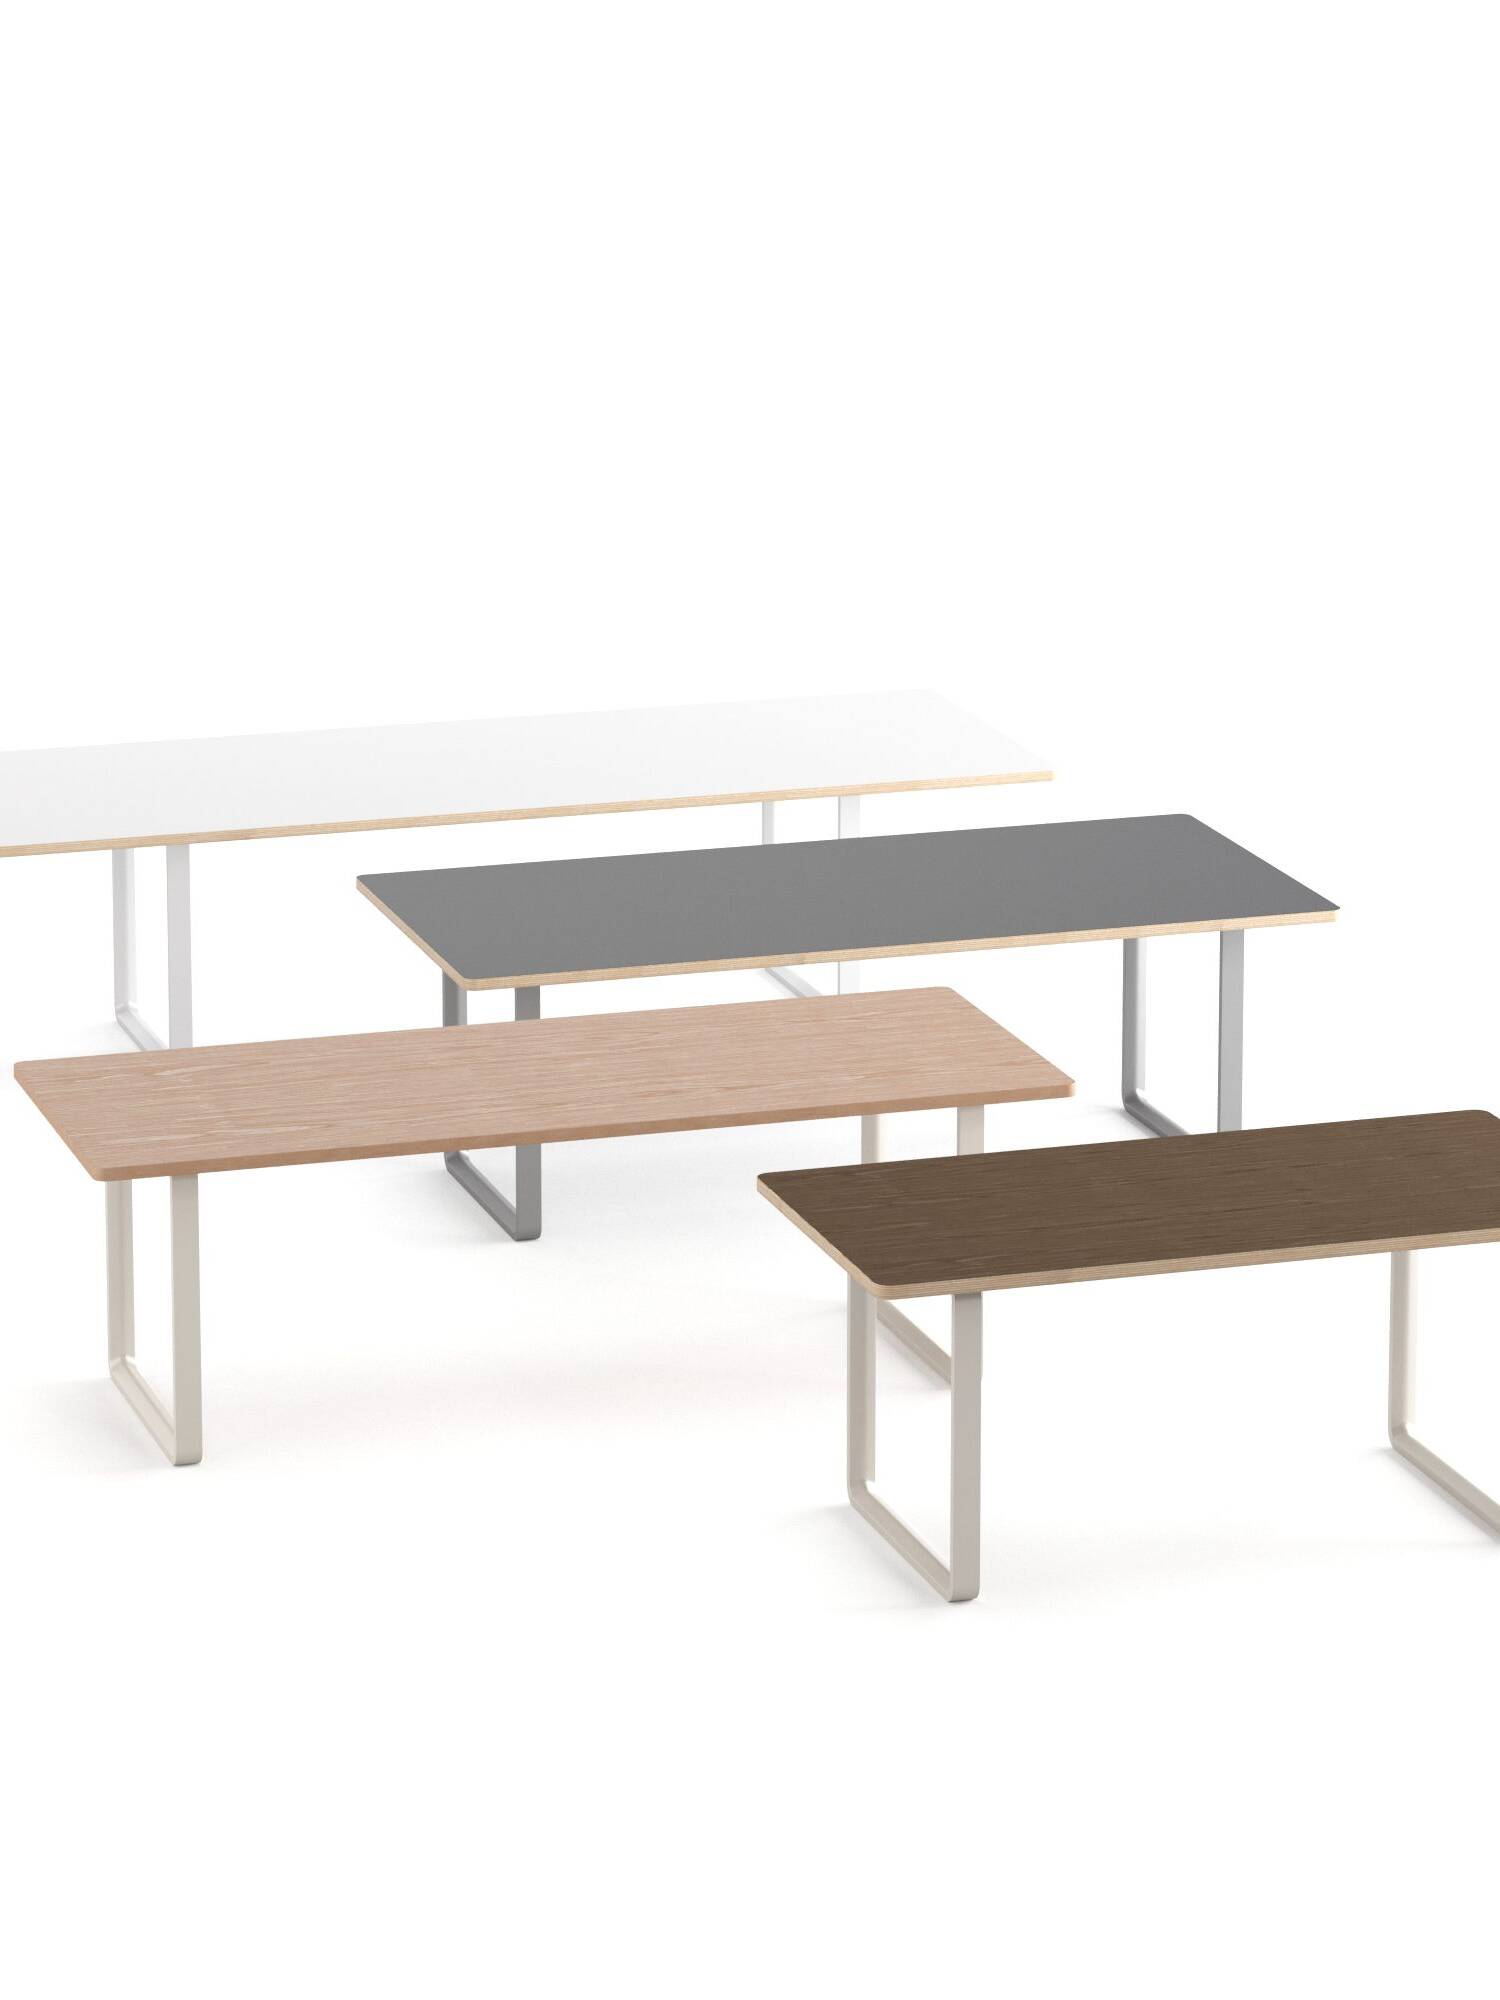 70/70 table (3d model)